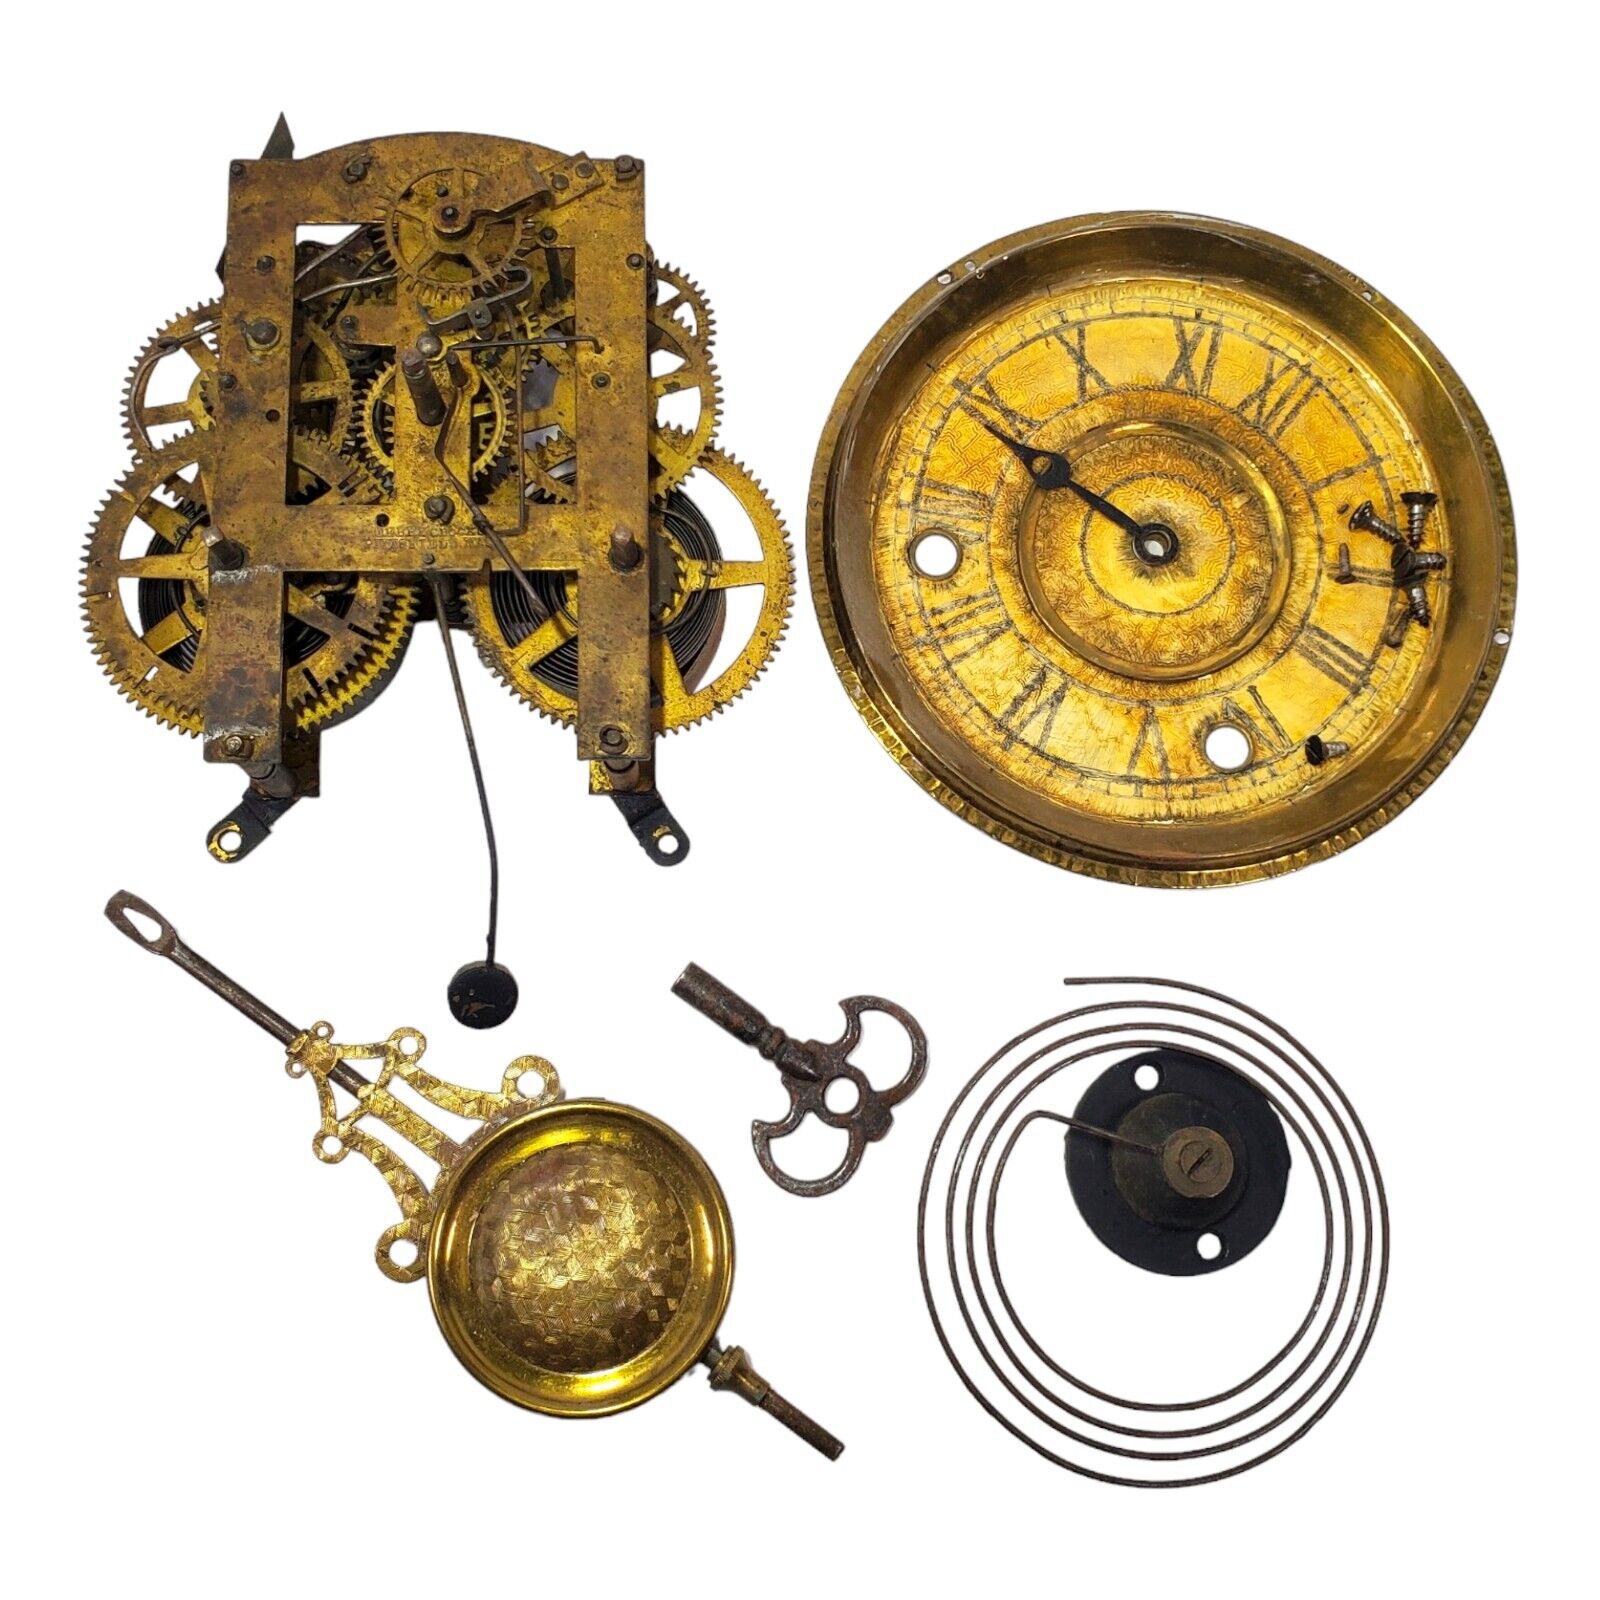 Terry Clock Co. Pittsfield Mass Movement Dial Pendulum & Key